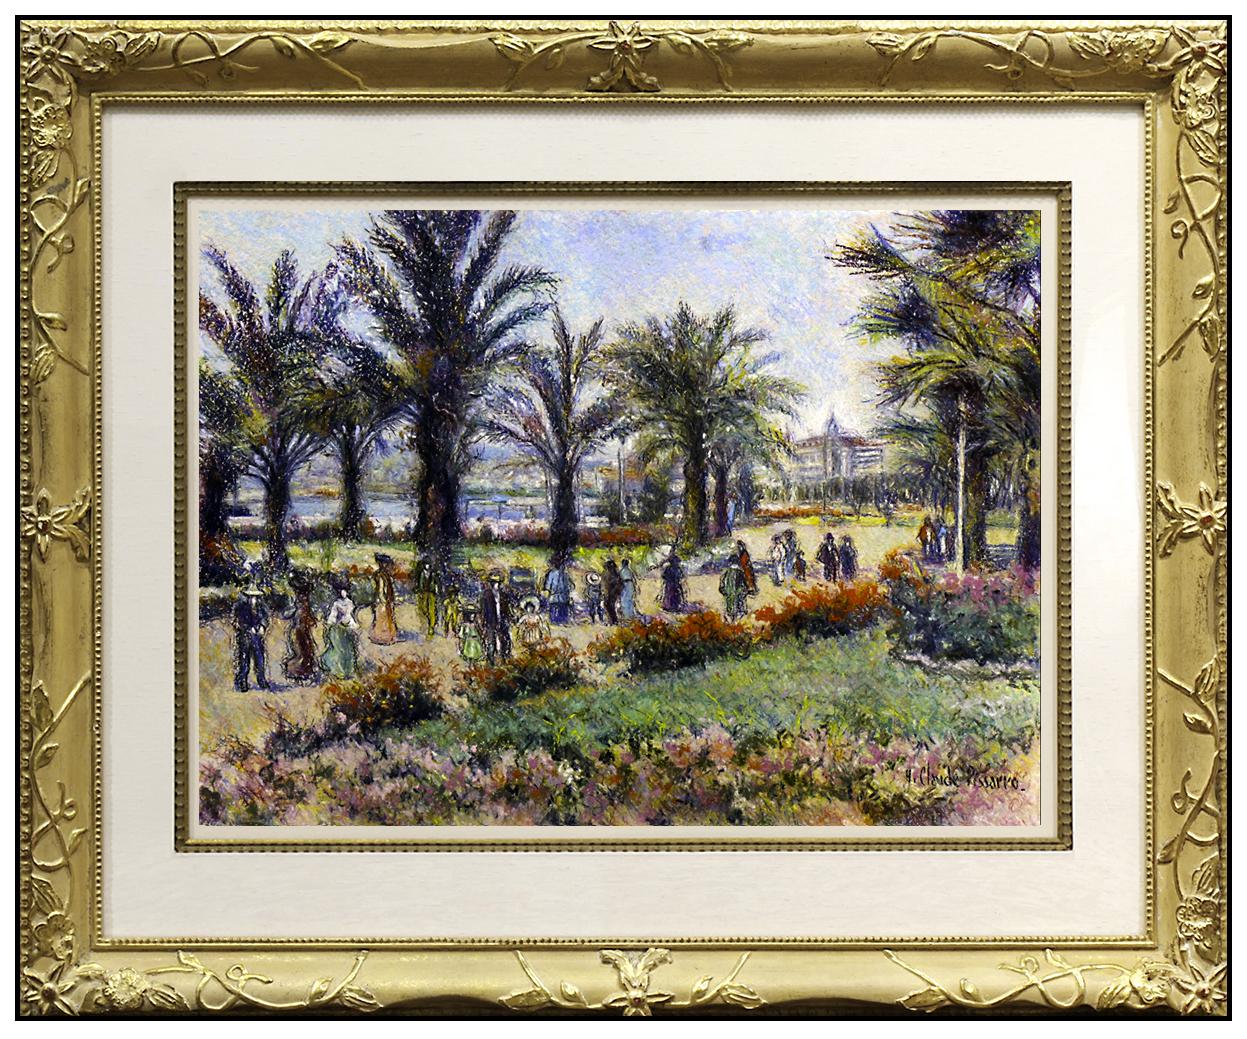 Hughes Claude Pissarro Landscape Art - H. Claude Pissarro Original Pastel French Landscape Hand Signed Seascape Artwork